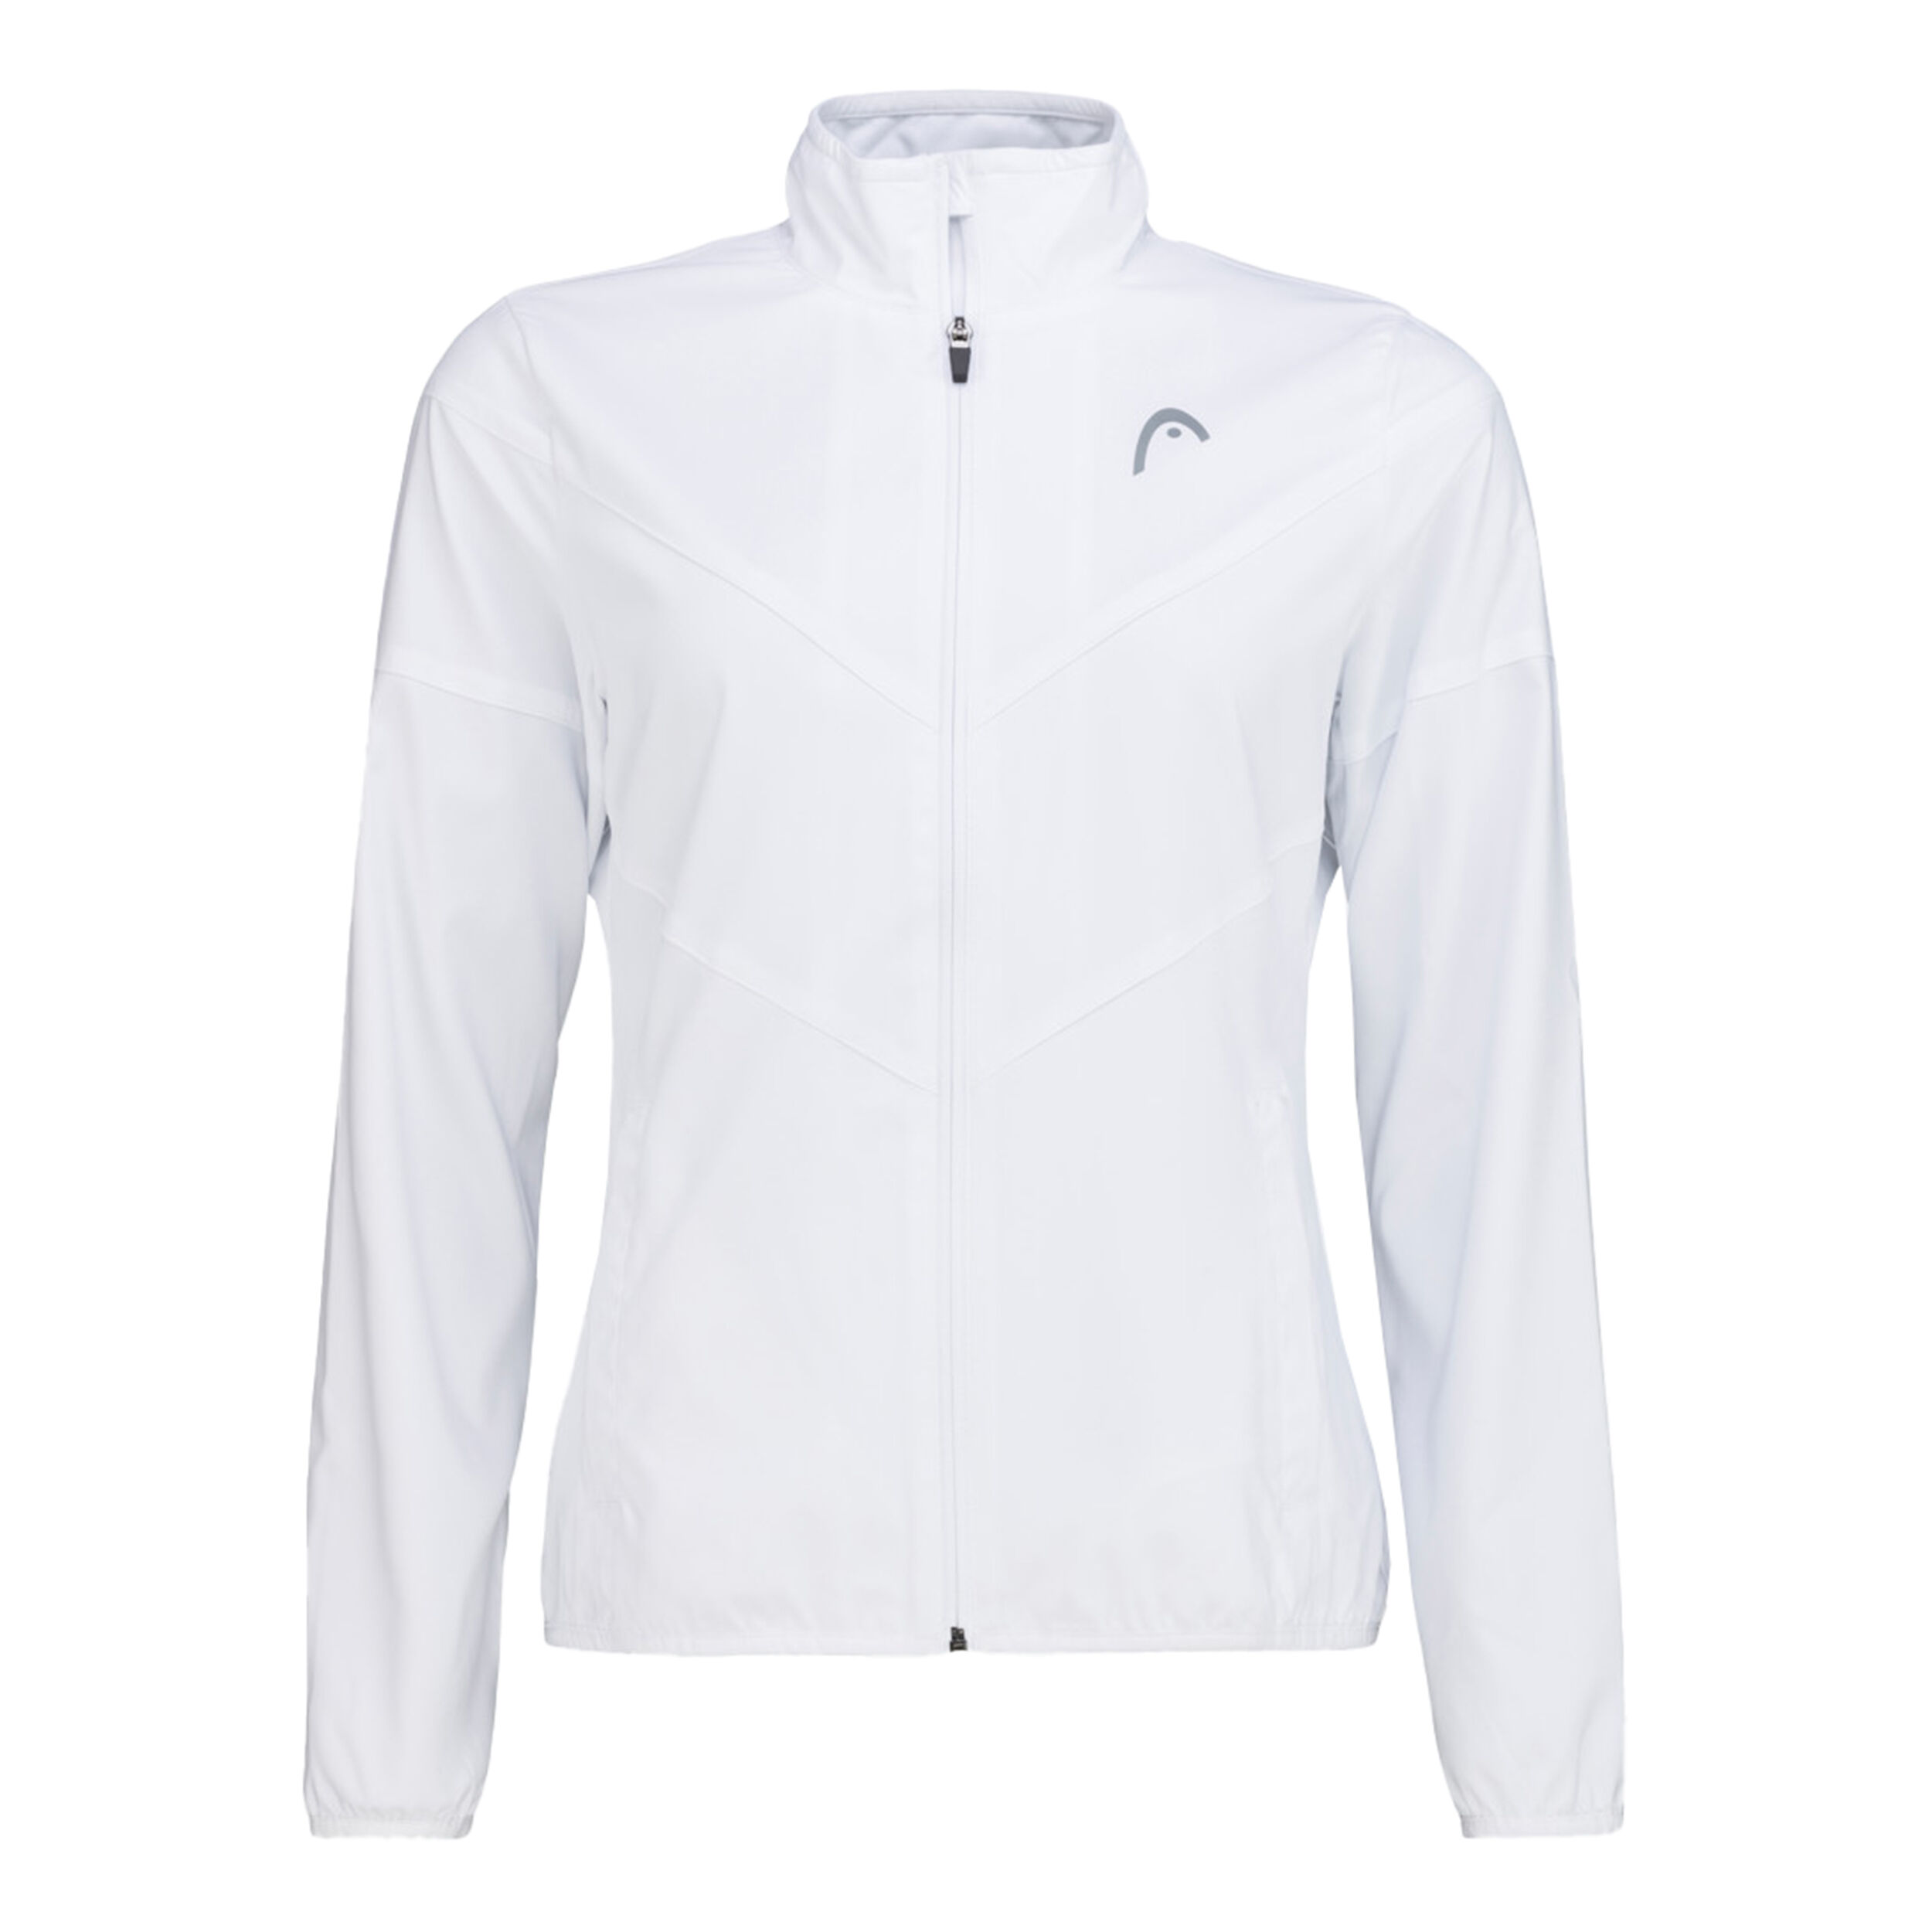 Head Club Jacket weiß Trainingsjacke Mädchen NEU 49,95€ 